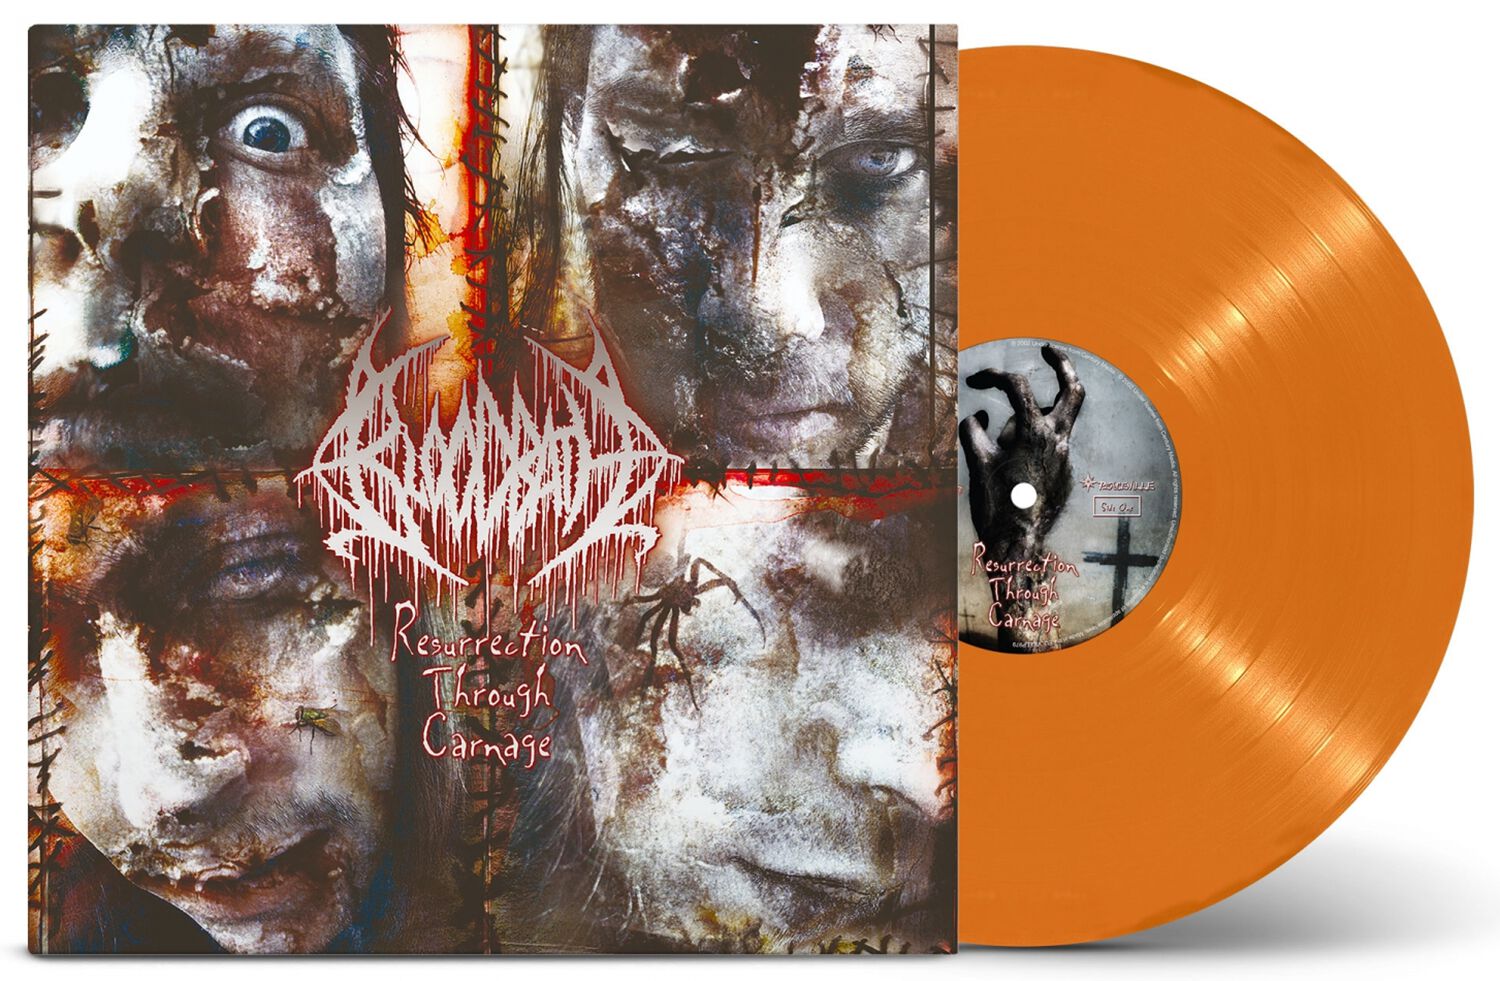 Bloodbath Resurrection through carnage LP orange